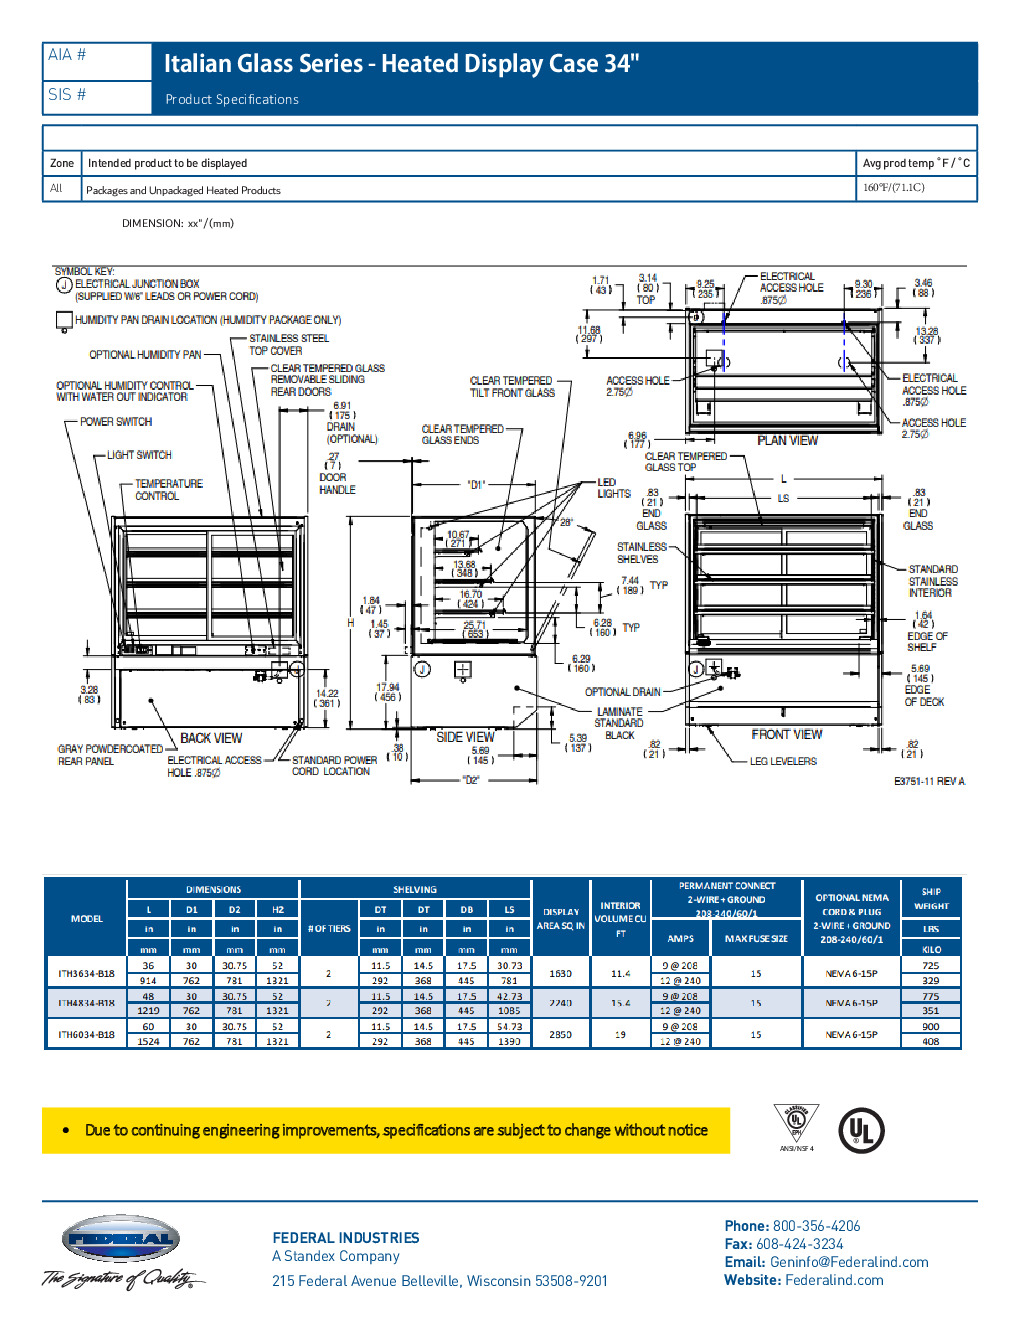 Federal Industries ITH3634-B18 Floor Model Heated Display Case